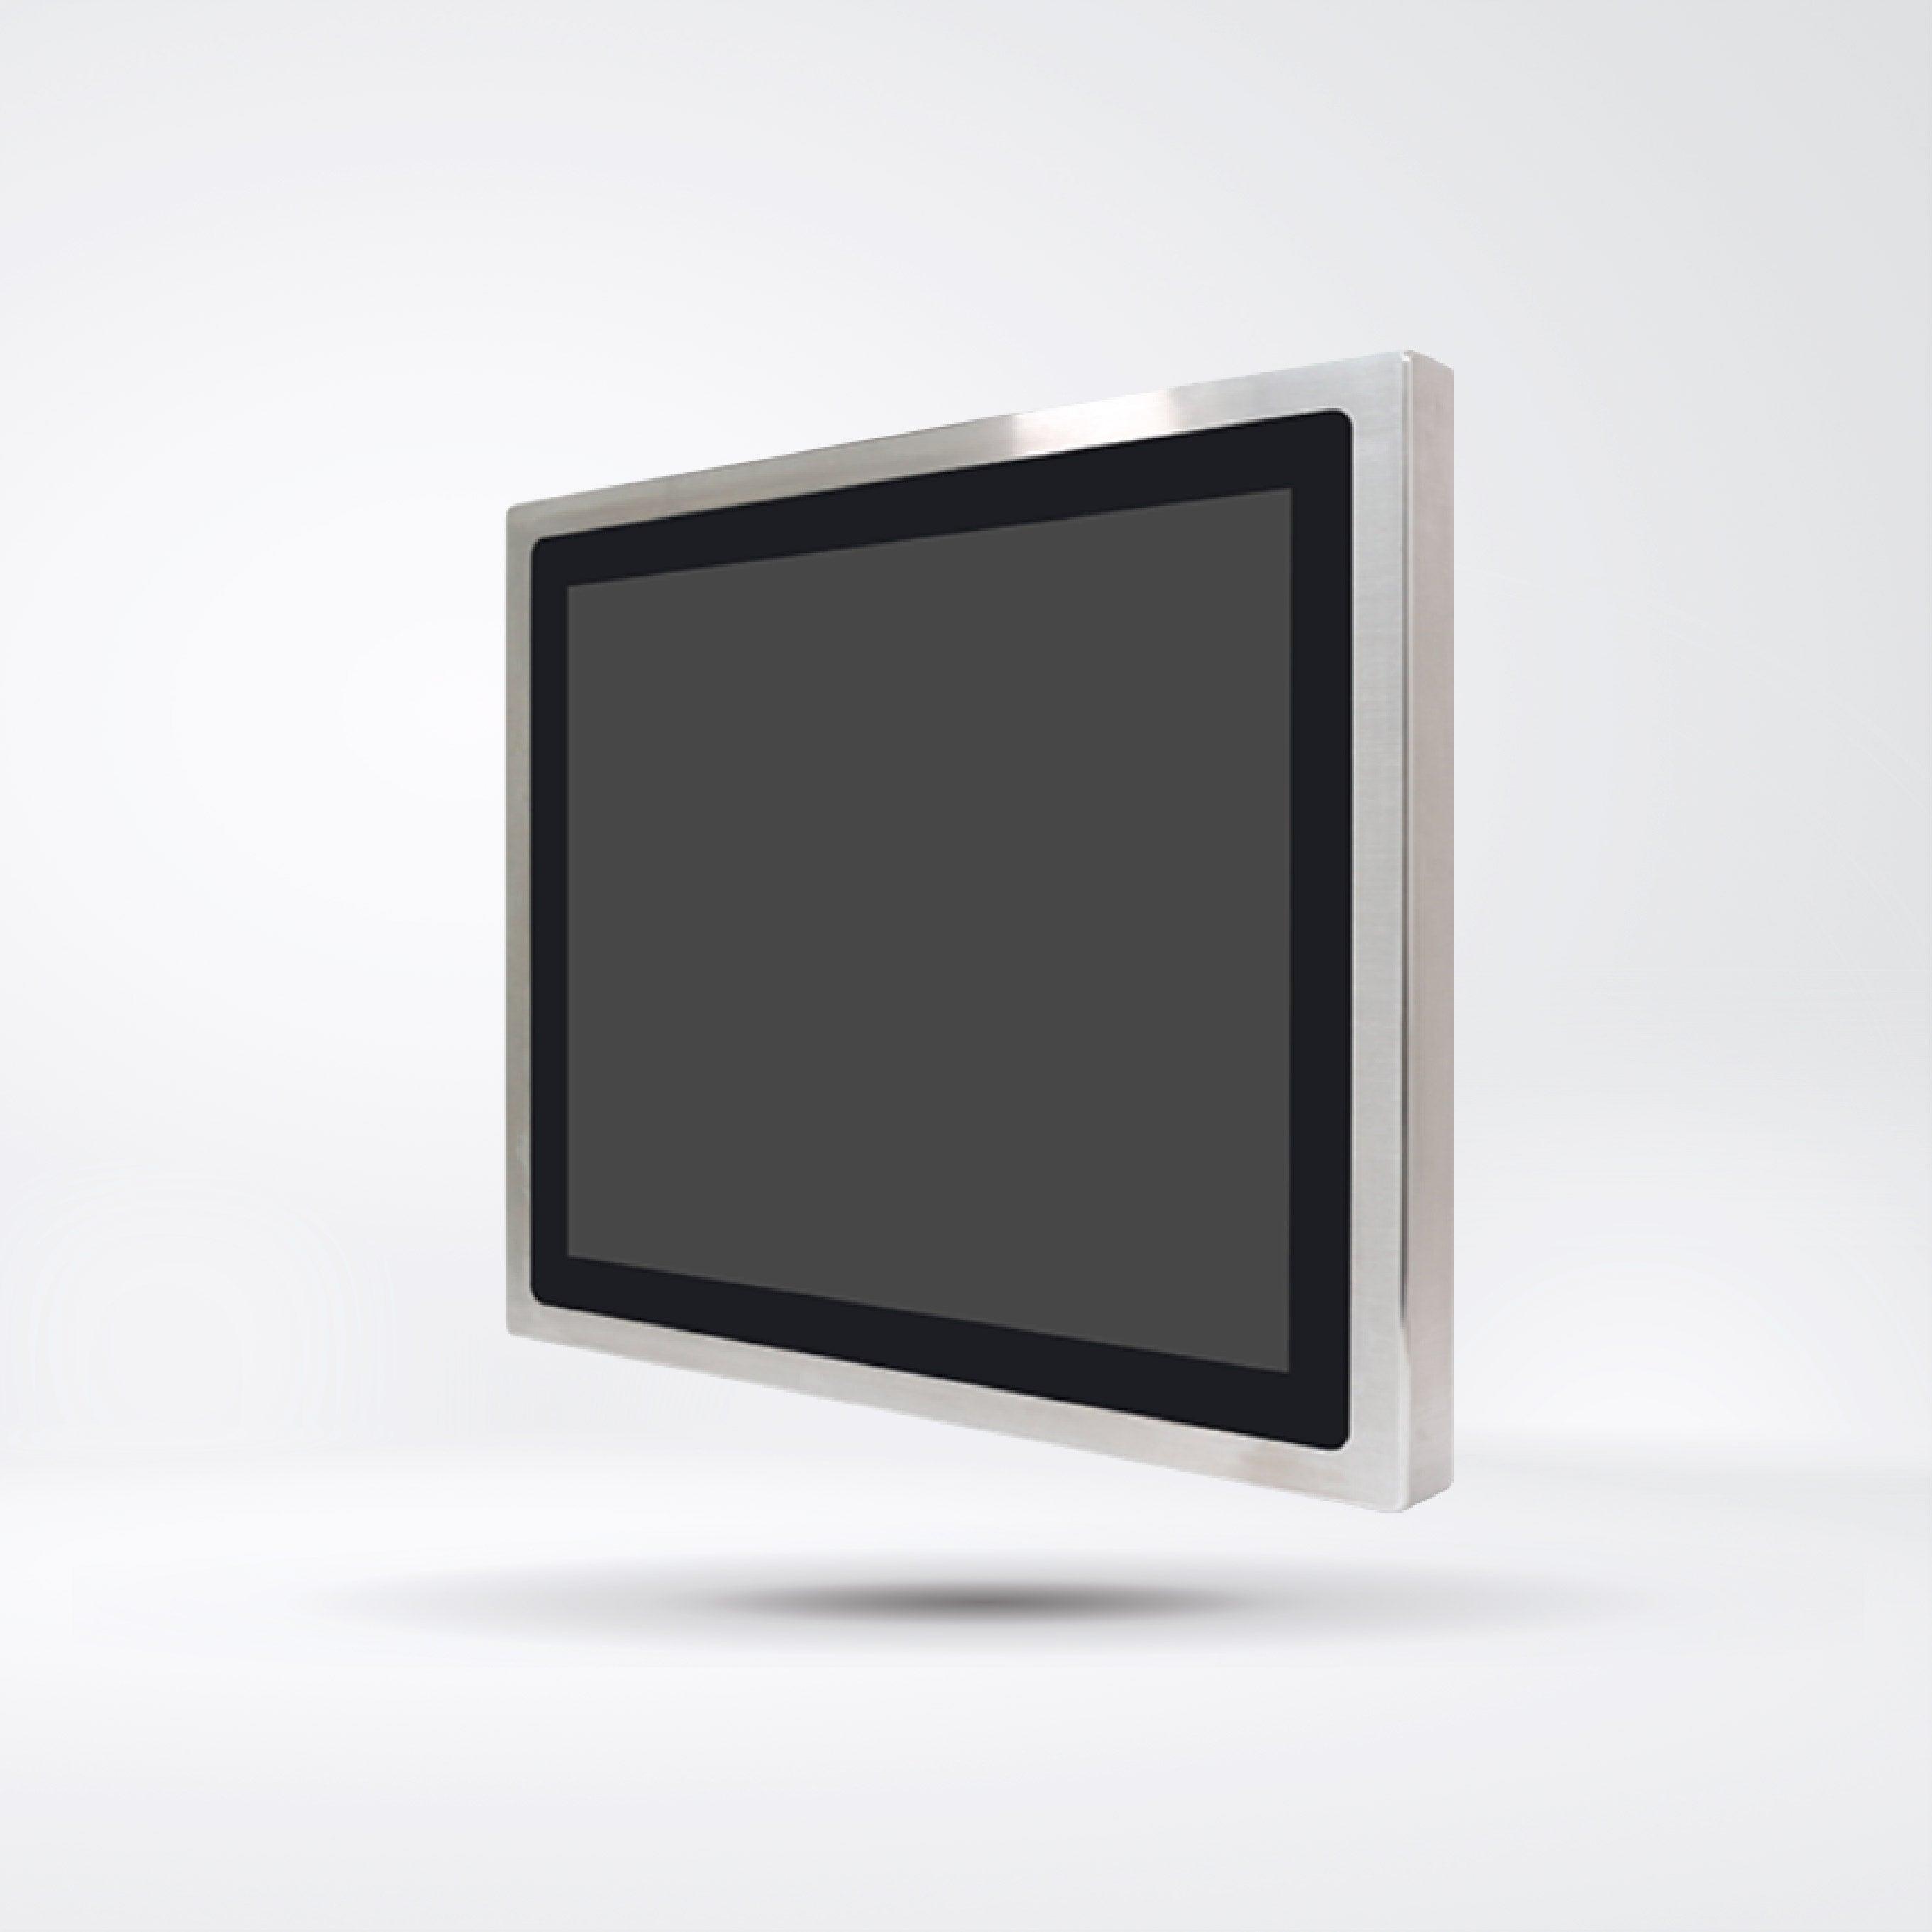 AEx-819P 19” Intel Celeron N2930 IP66 Stainless Steel Panel PC, Luminance : 350 (cd/m²) - Riverplus